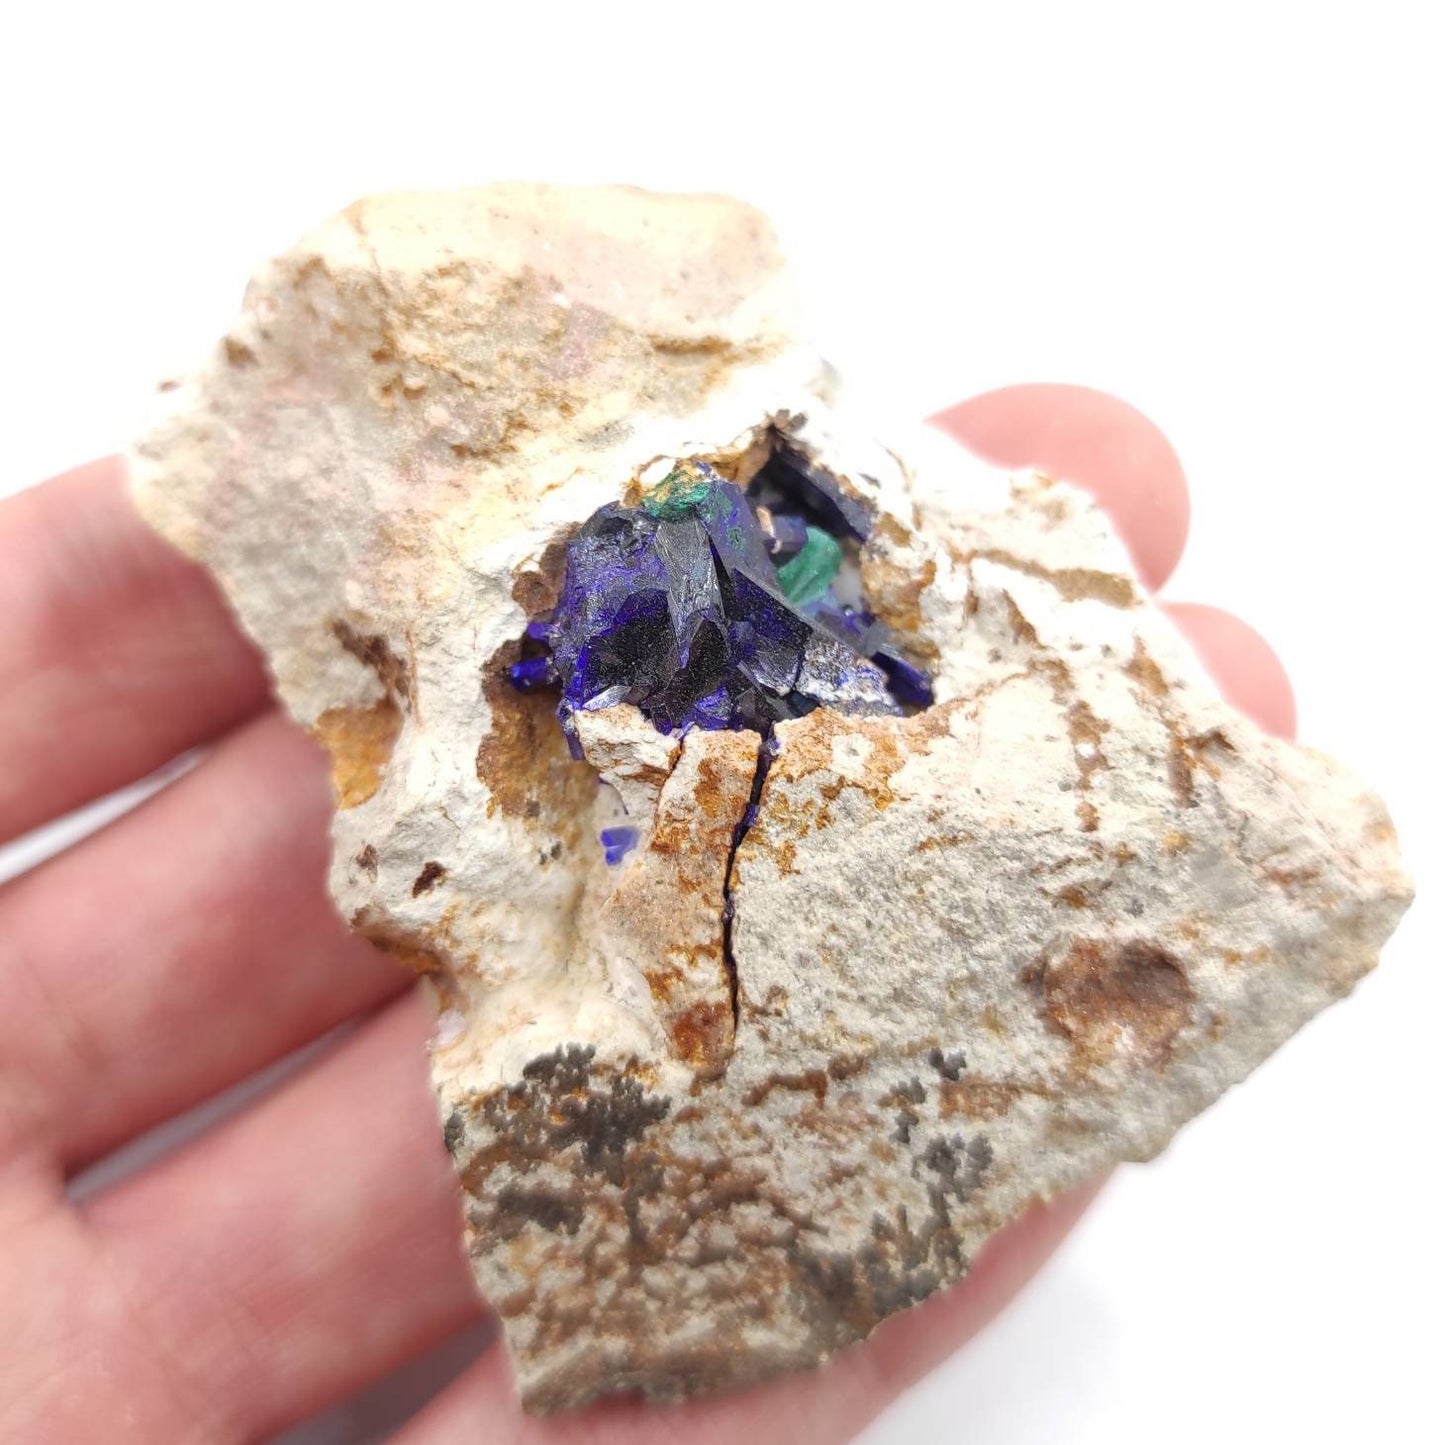 83g Azurite in Matrix - Kerrouchen, Morocco - Blue Azurite Specimen in Matrix - Crystallized Blue Azurite - High Quality Azurite Mineral